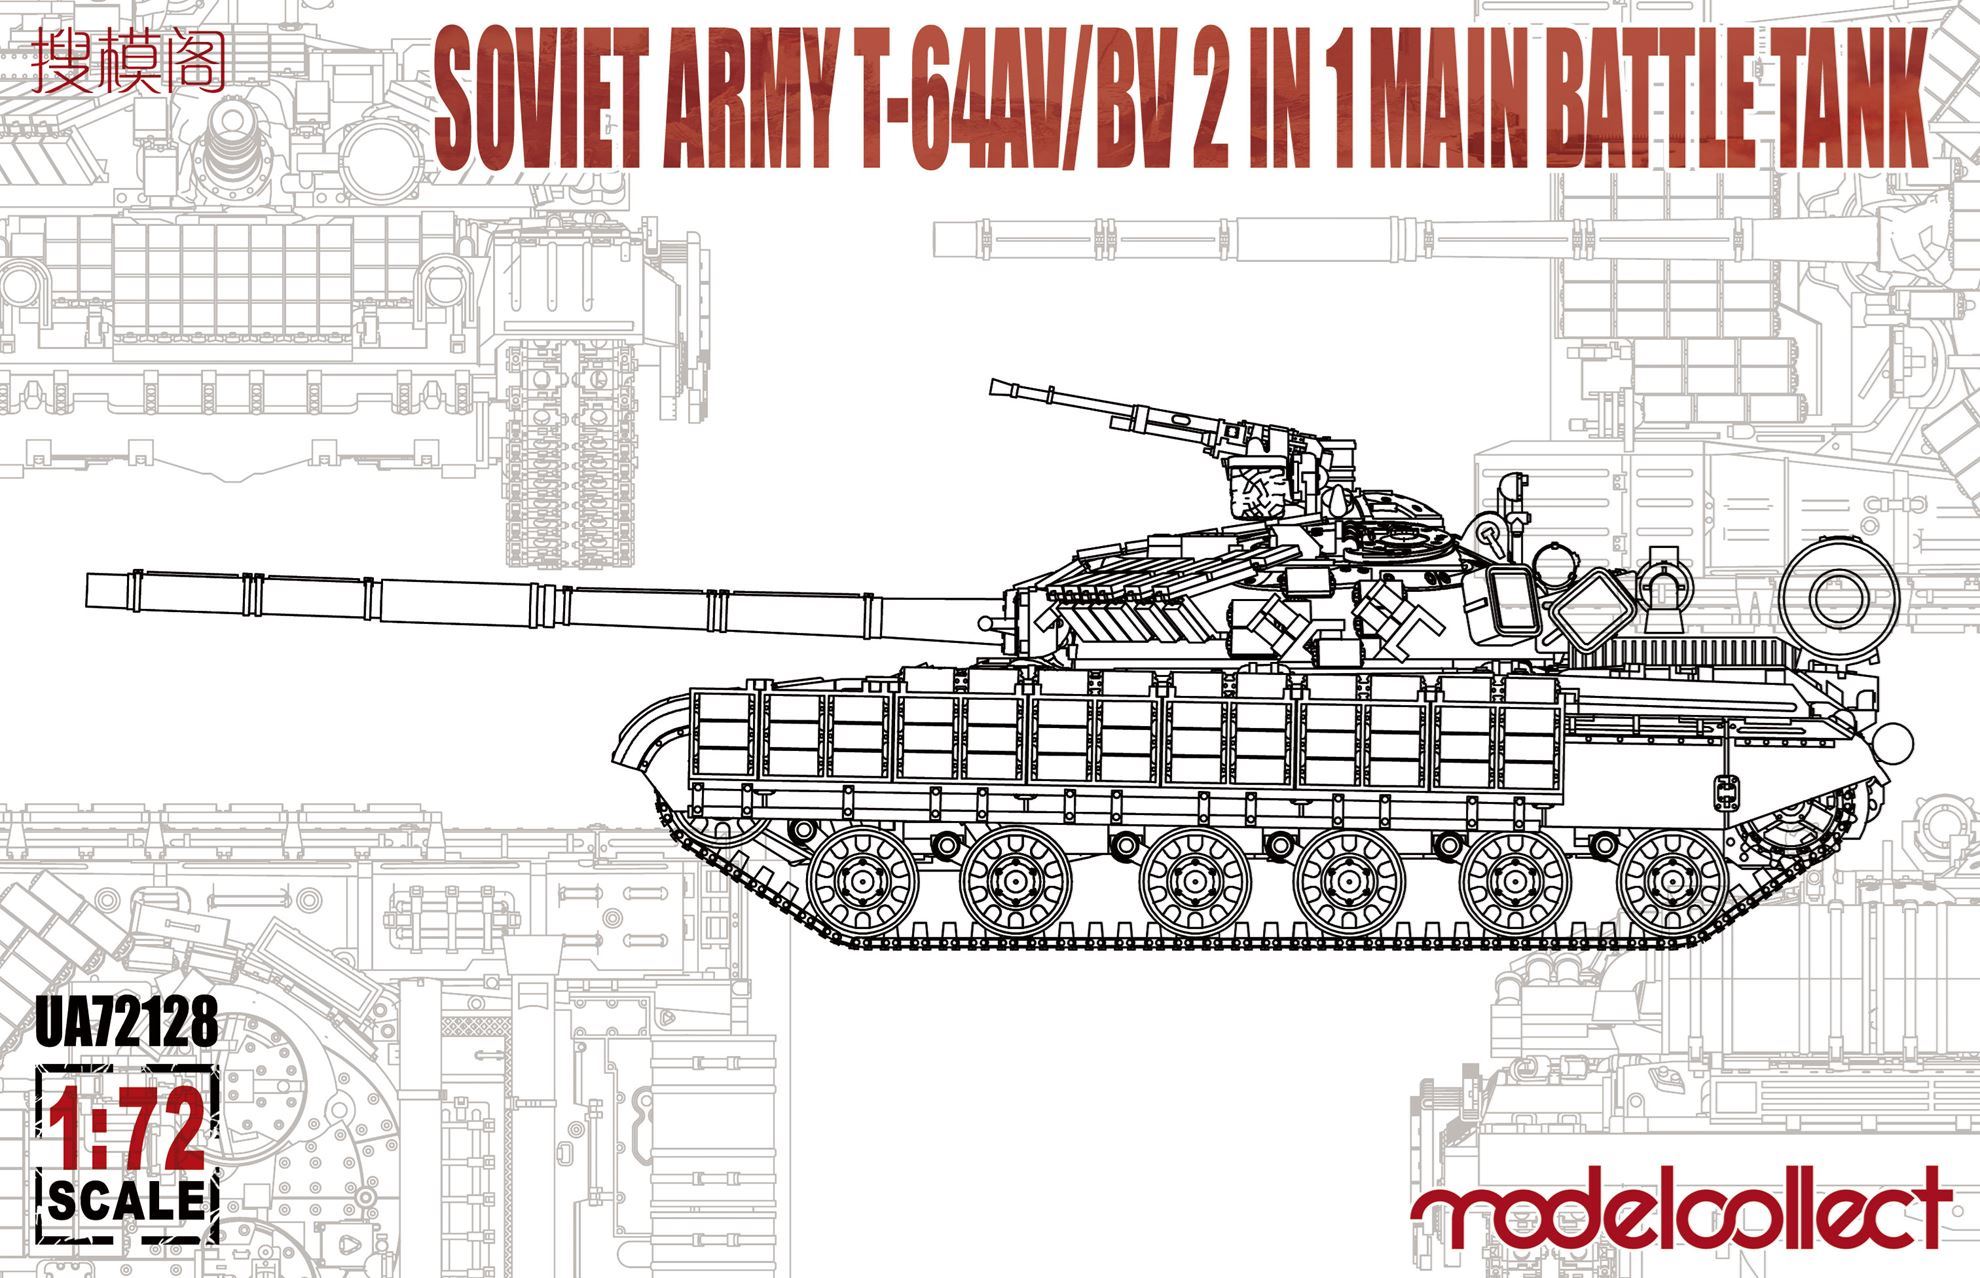 Soviet T-64AV/BV 2 IN 1 Main Battle Tank